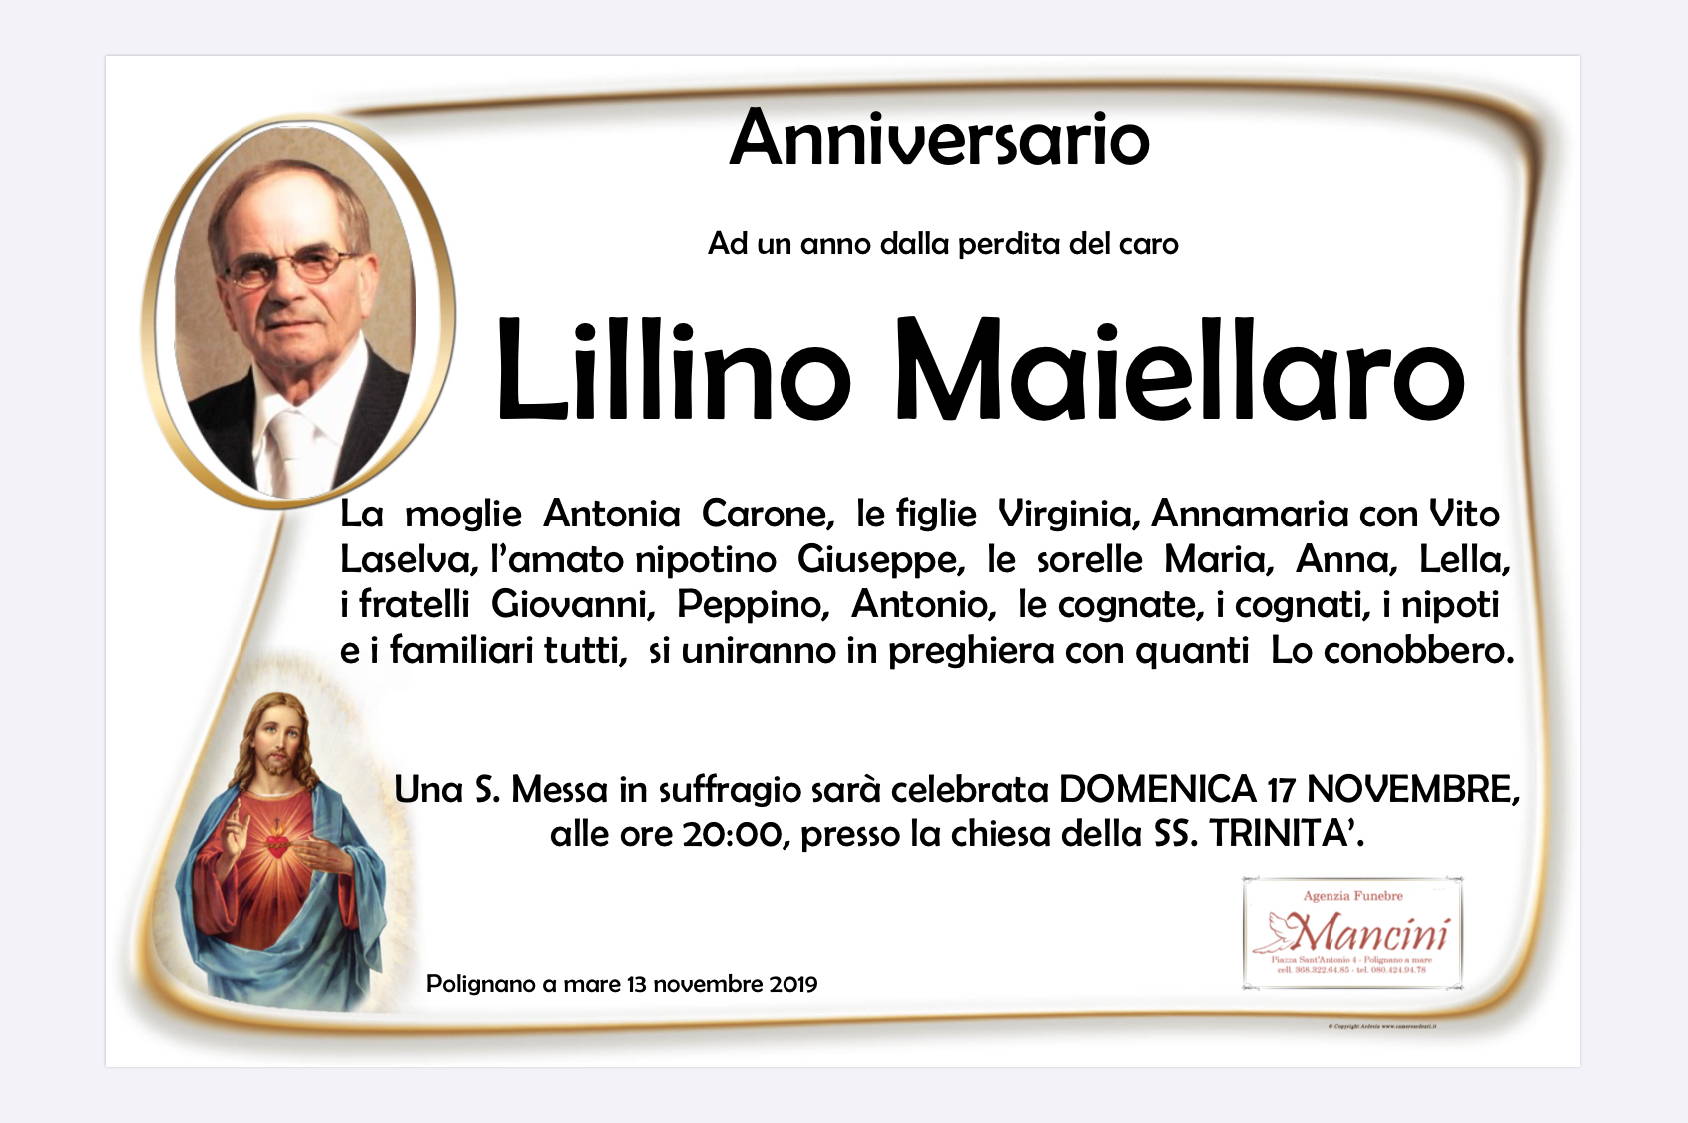 Lillino Maiellaro